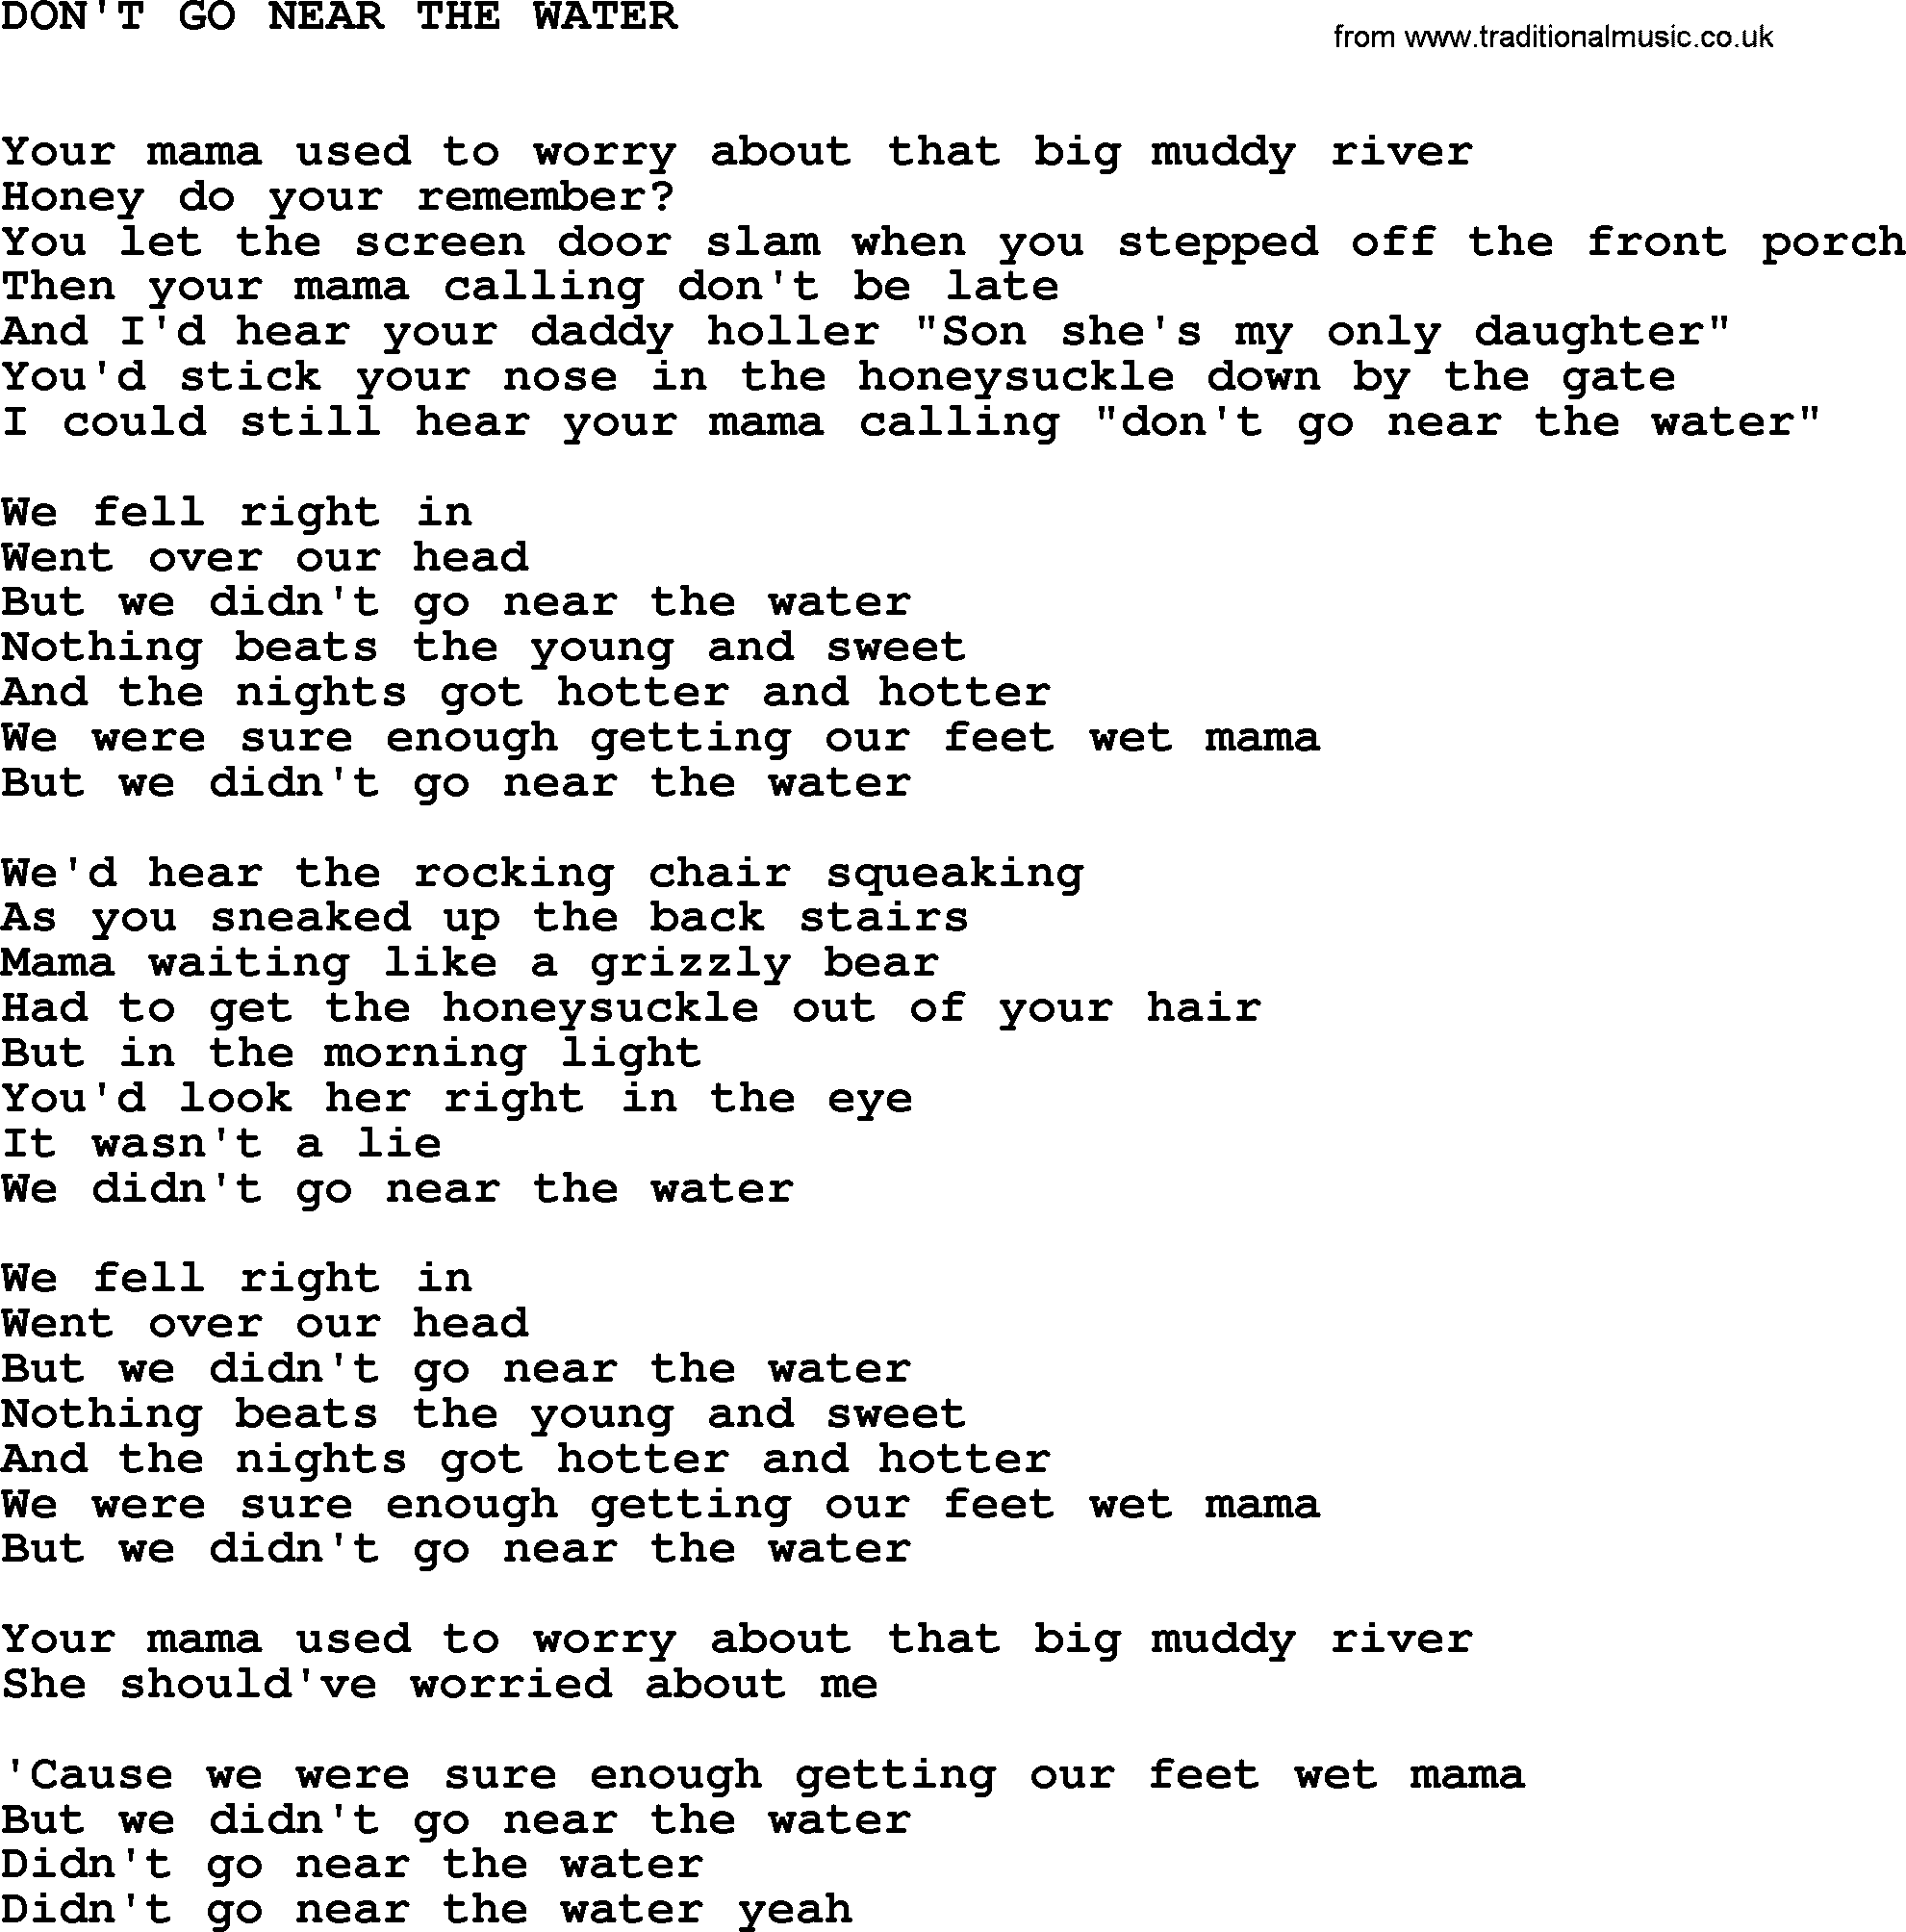 Johnny Cash song Don't Go Near The Water.txt lyrics